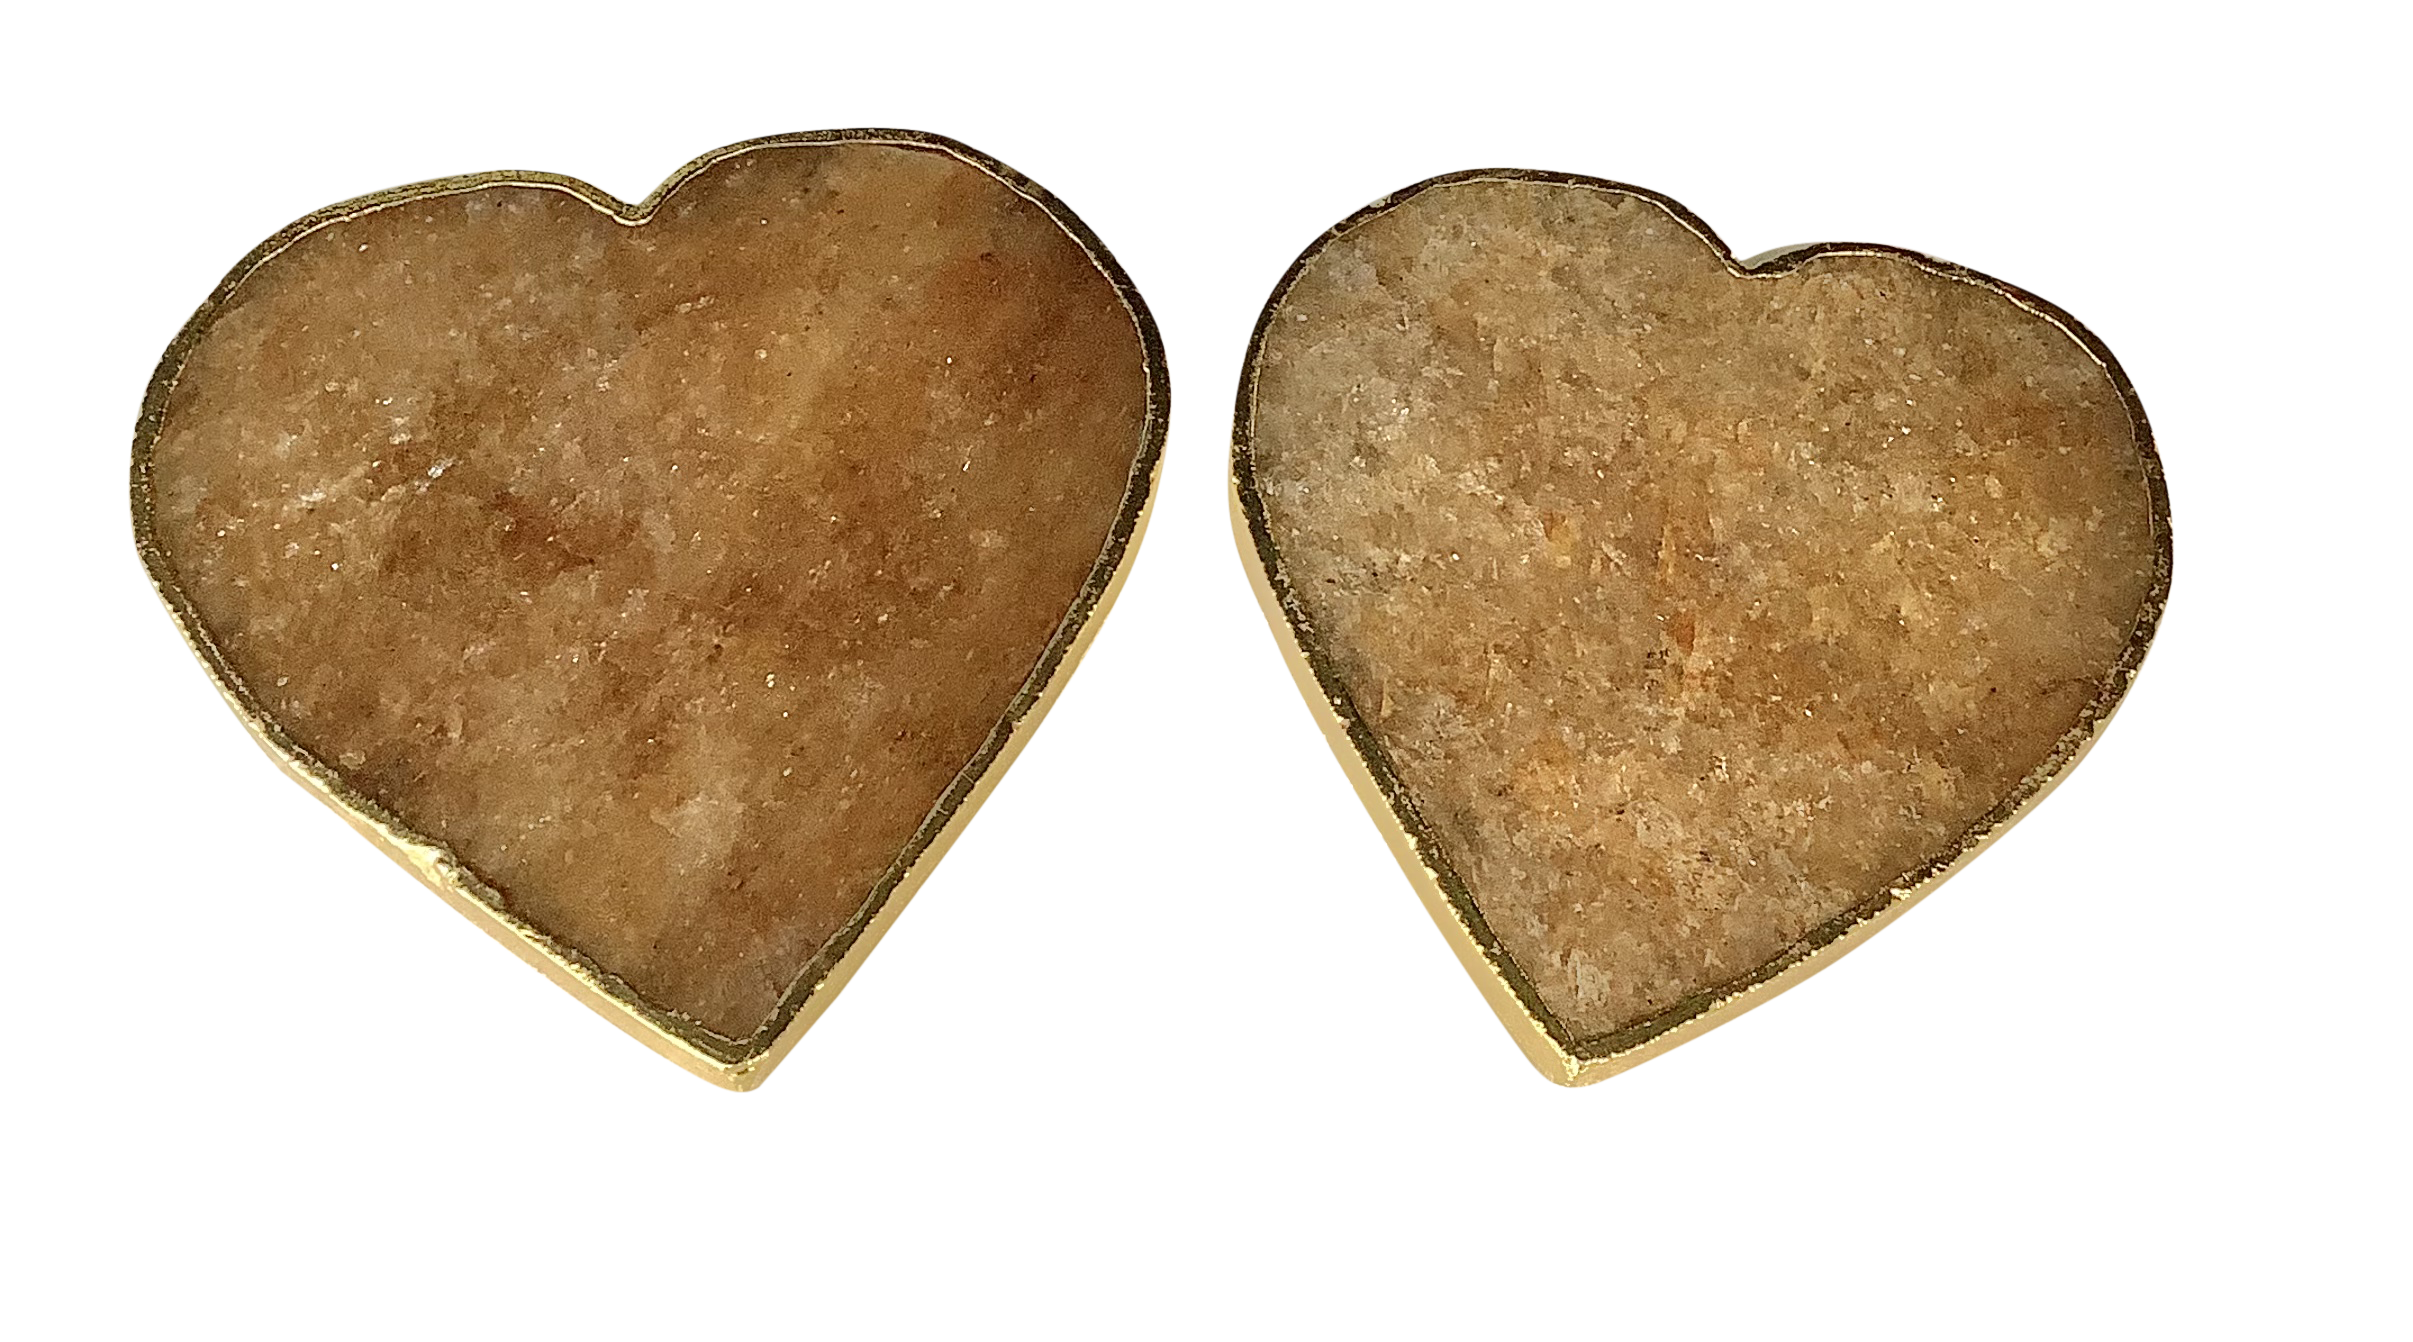 Golden Quartz Crystal Coaster Heart Shaped 4 Pieces